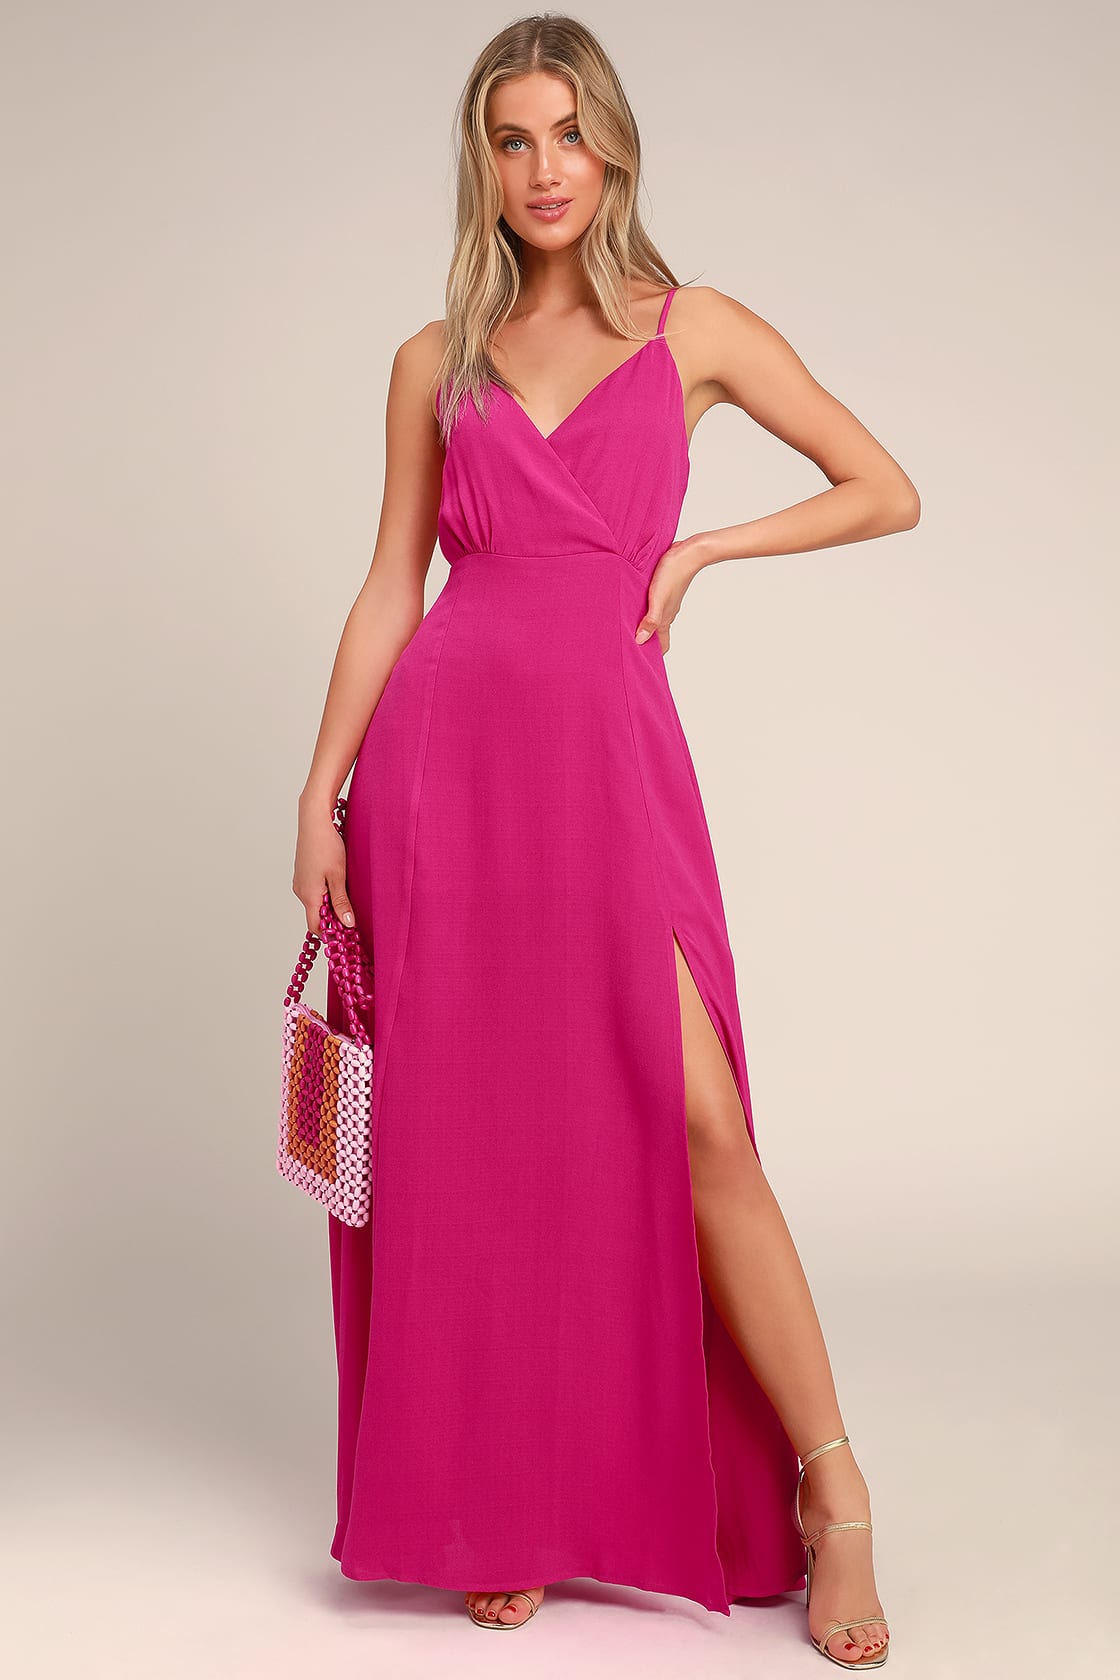 Glam Hot Pink Dress - Pink Maxi Dress - Side Slit Maxi Dress - Lulus